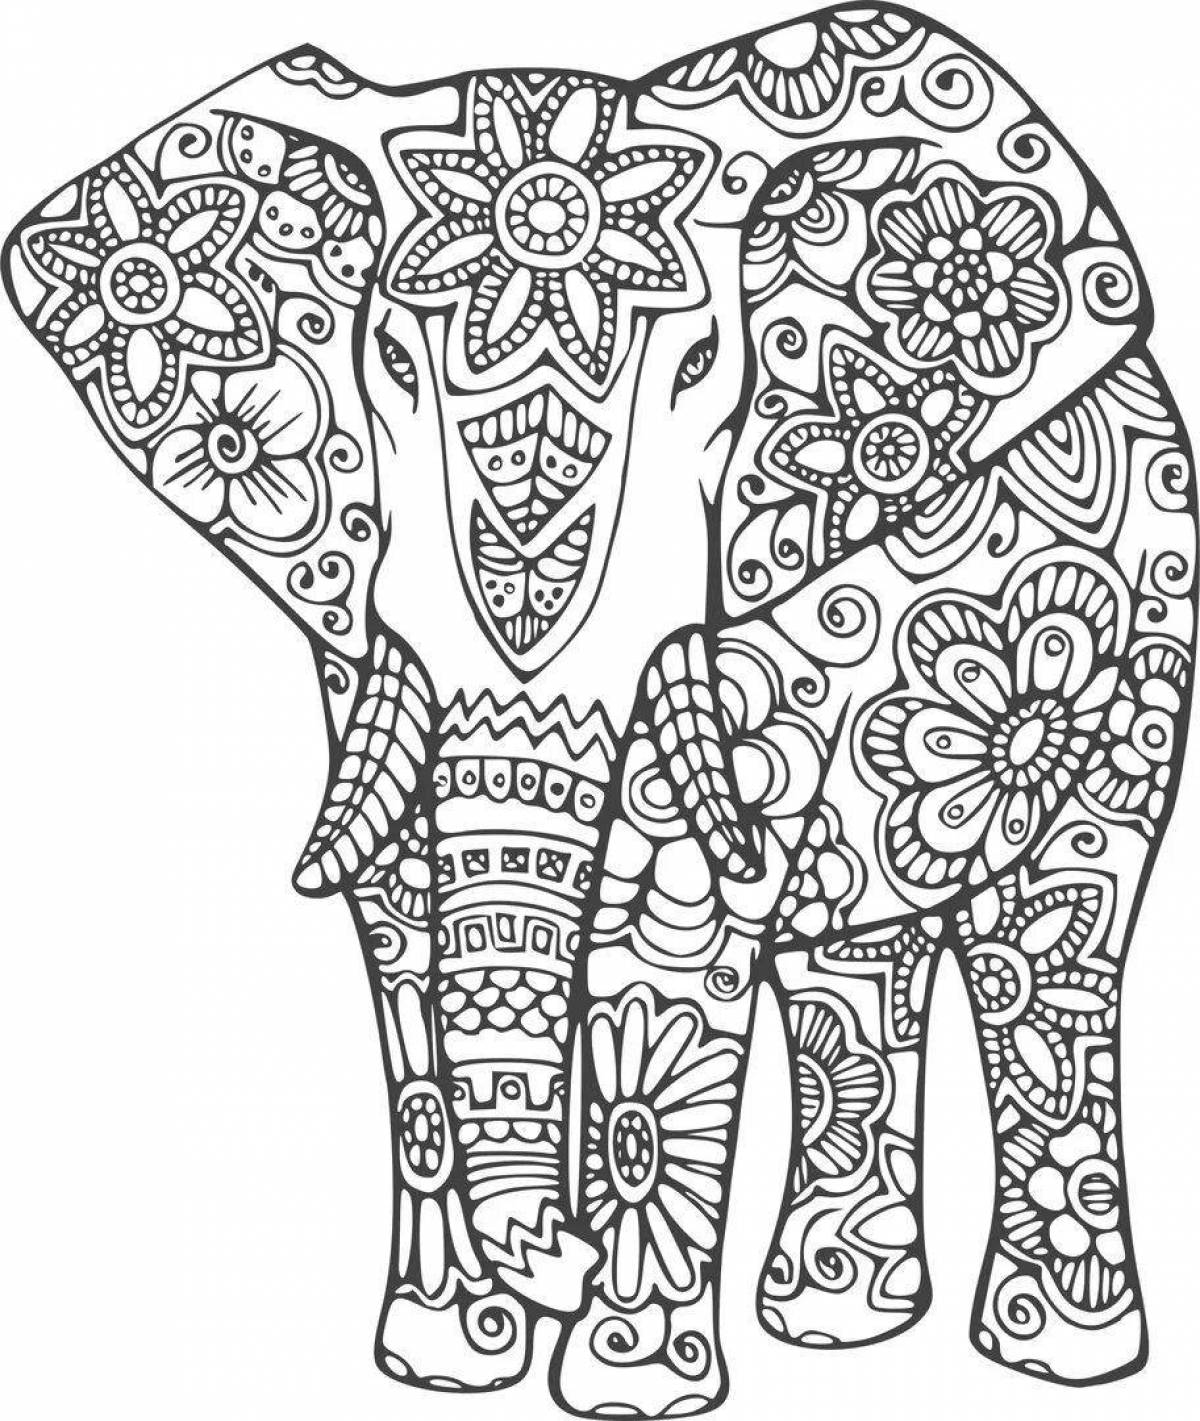 Serene coloring anti-stress elephant